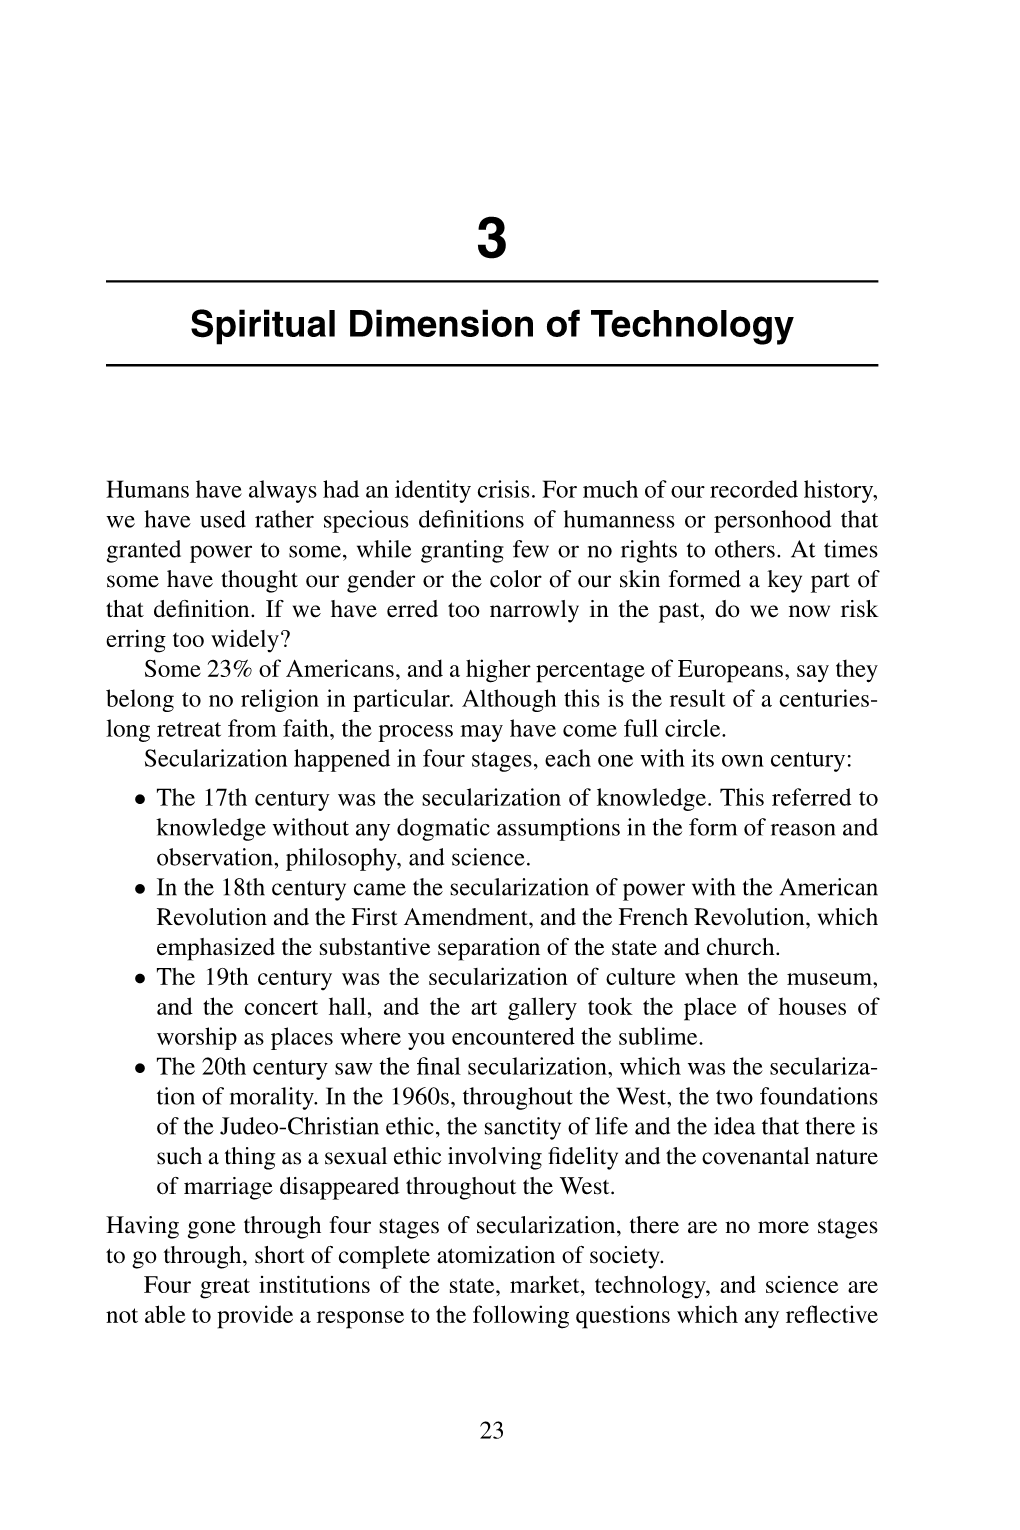 Spiritual Dimension of Technology